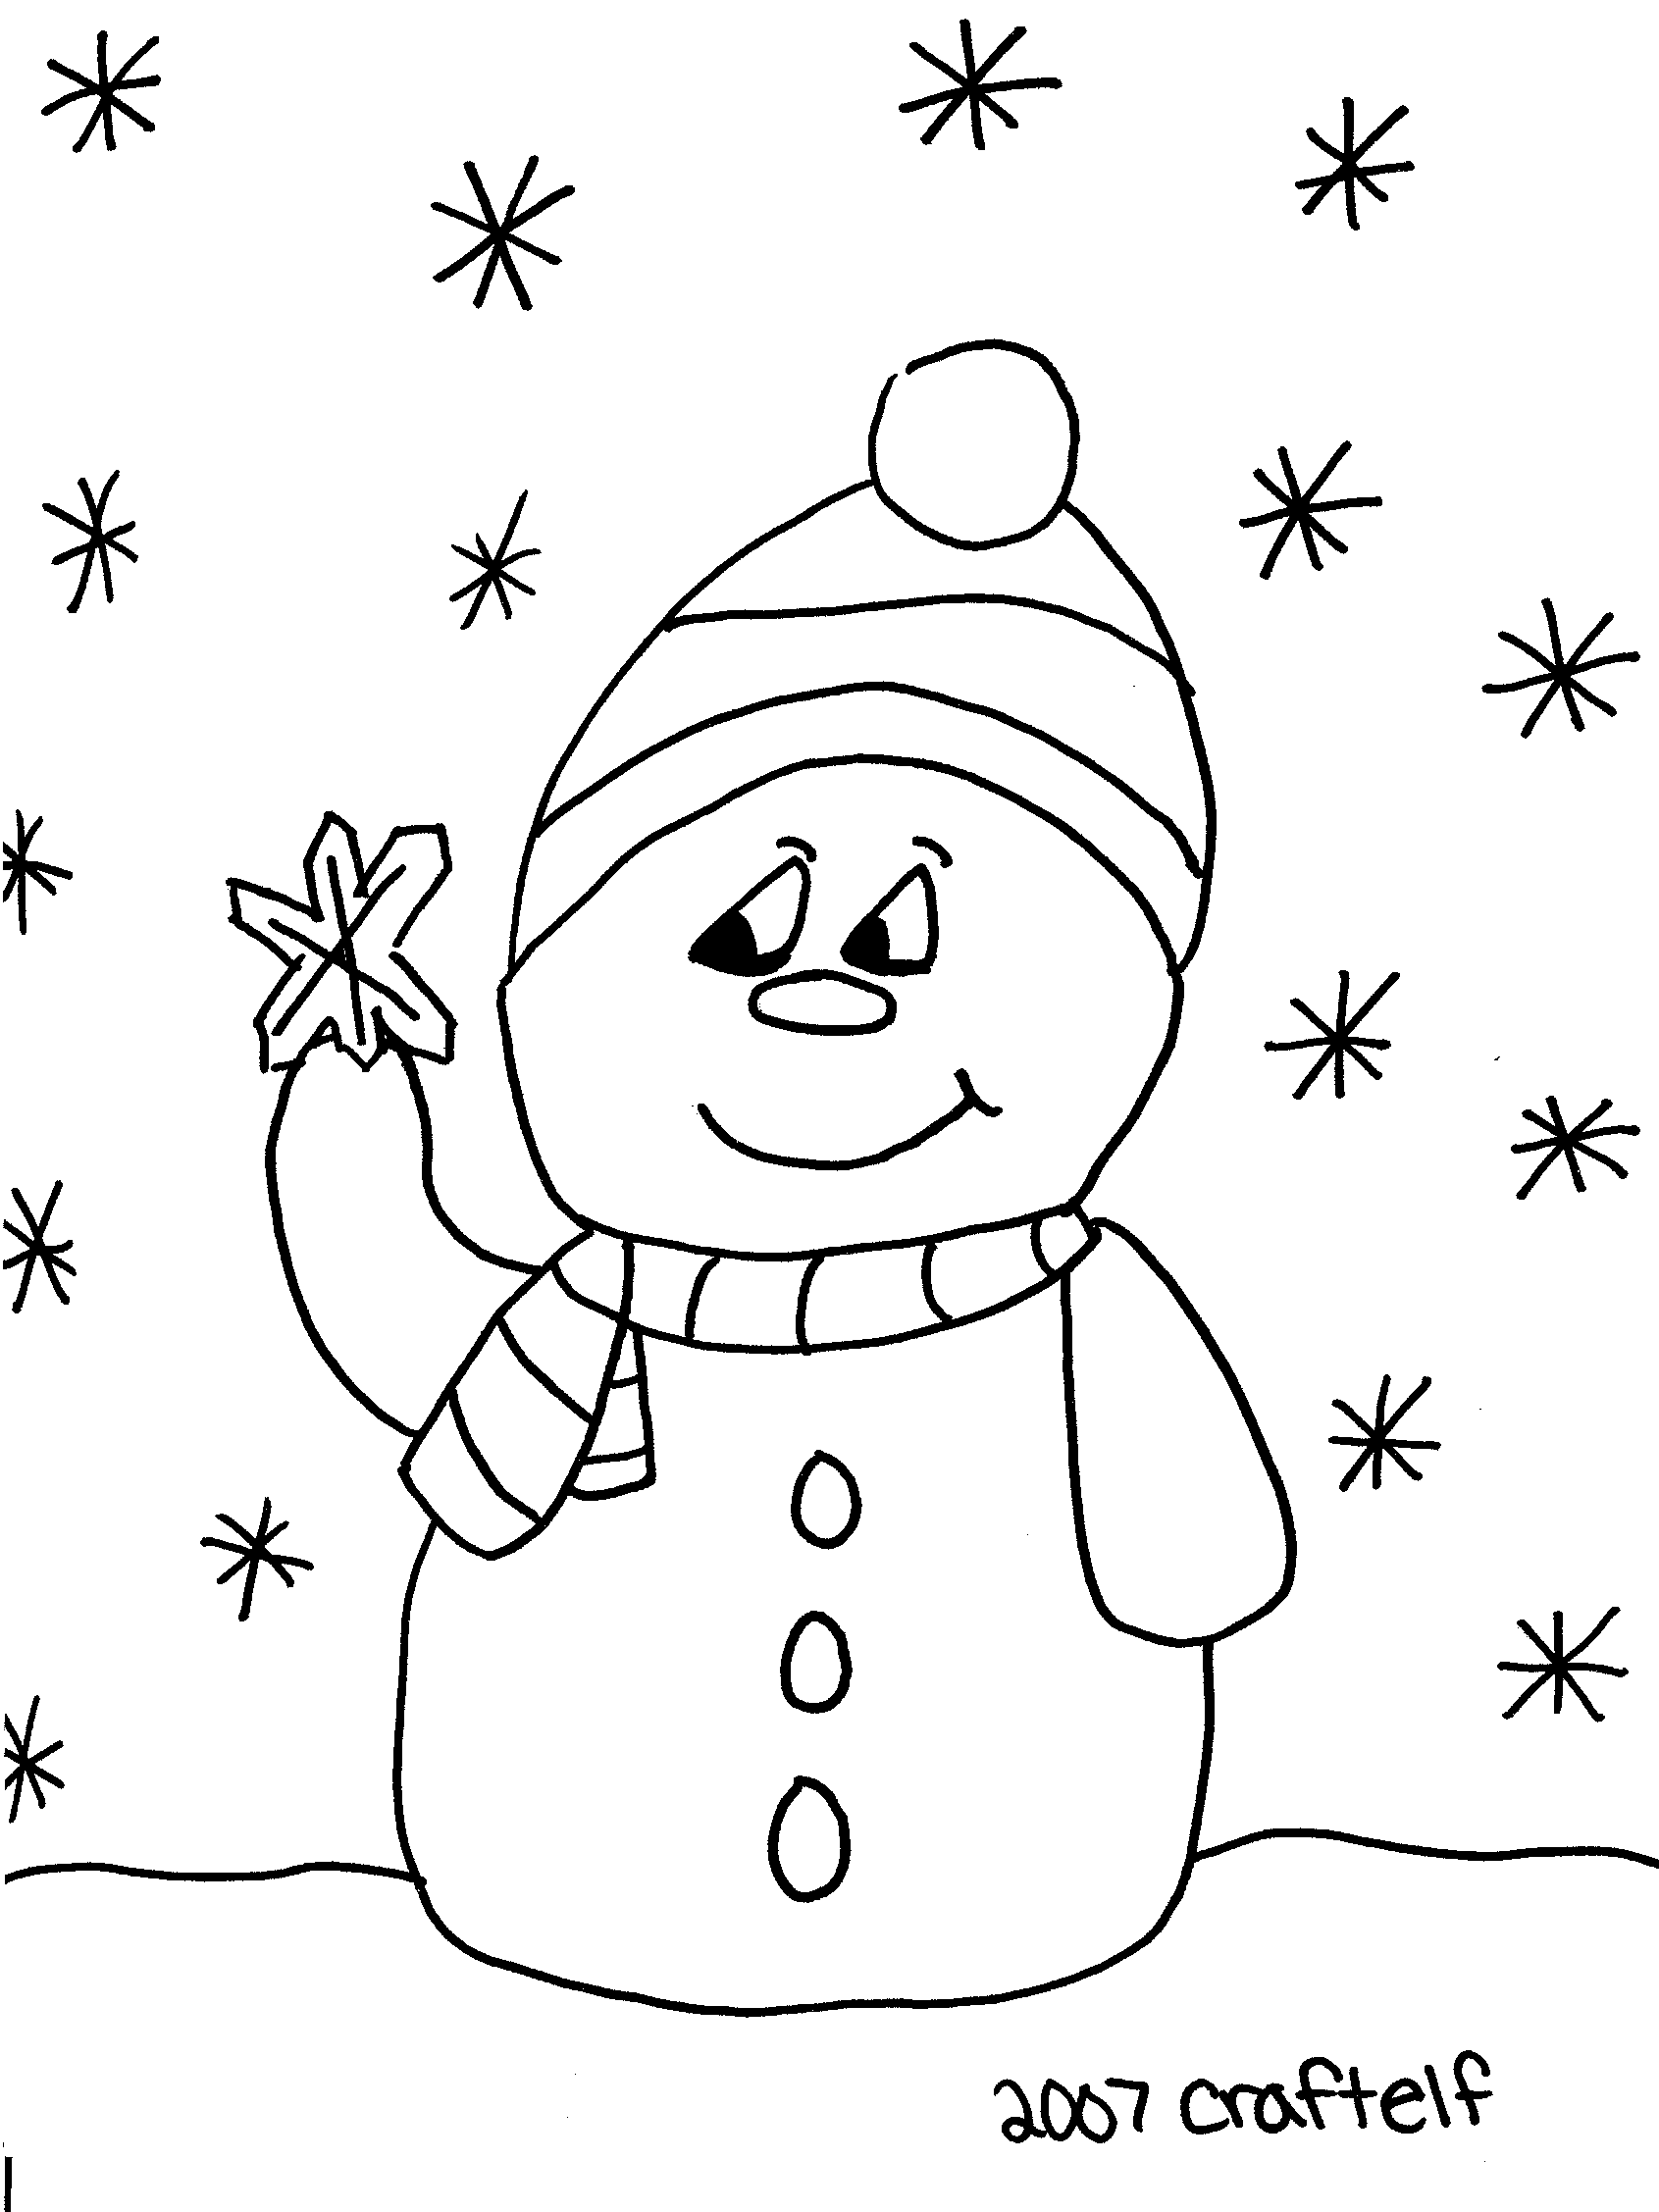 Página para colorir: Boneco de neve (Personagens) #89479 - Páginas para Colorir Imprimíveis Gratuitamente